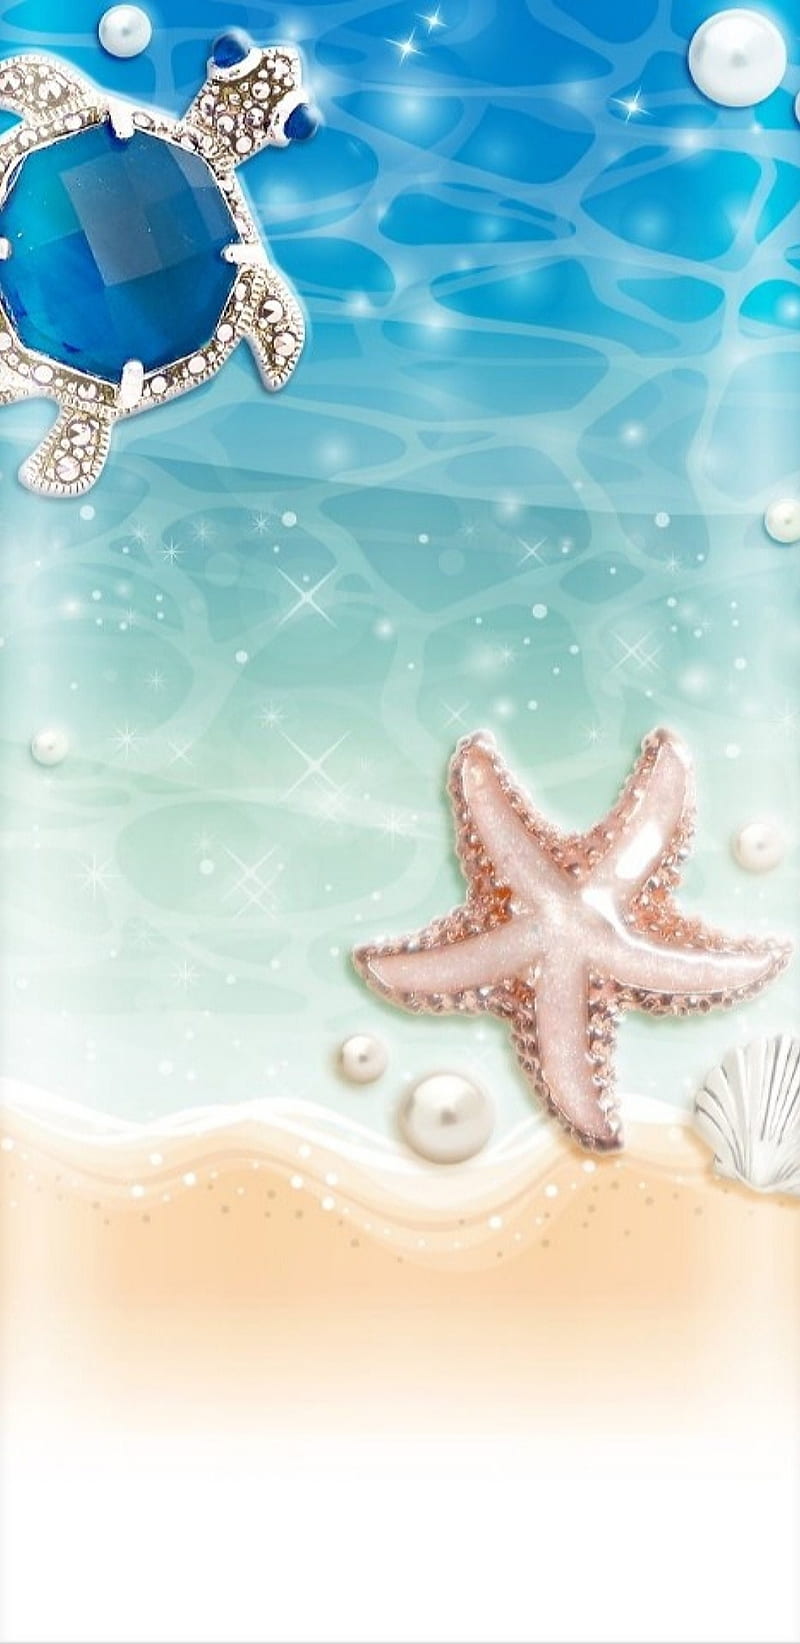 A beach scene with sea turtle and starfish - Starfish, bling